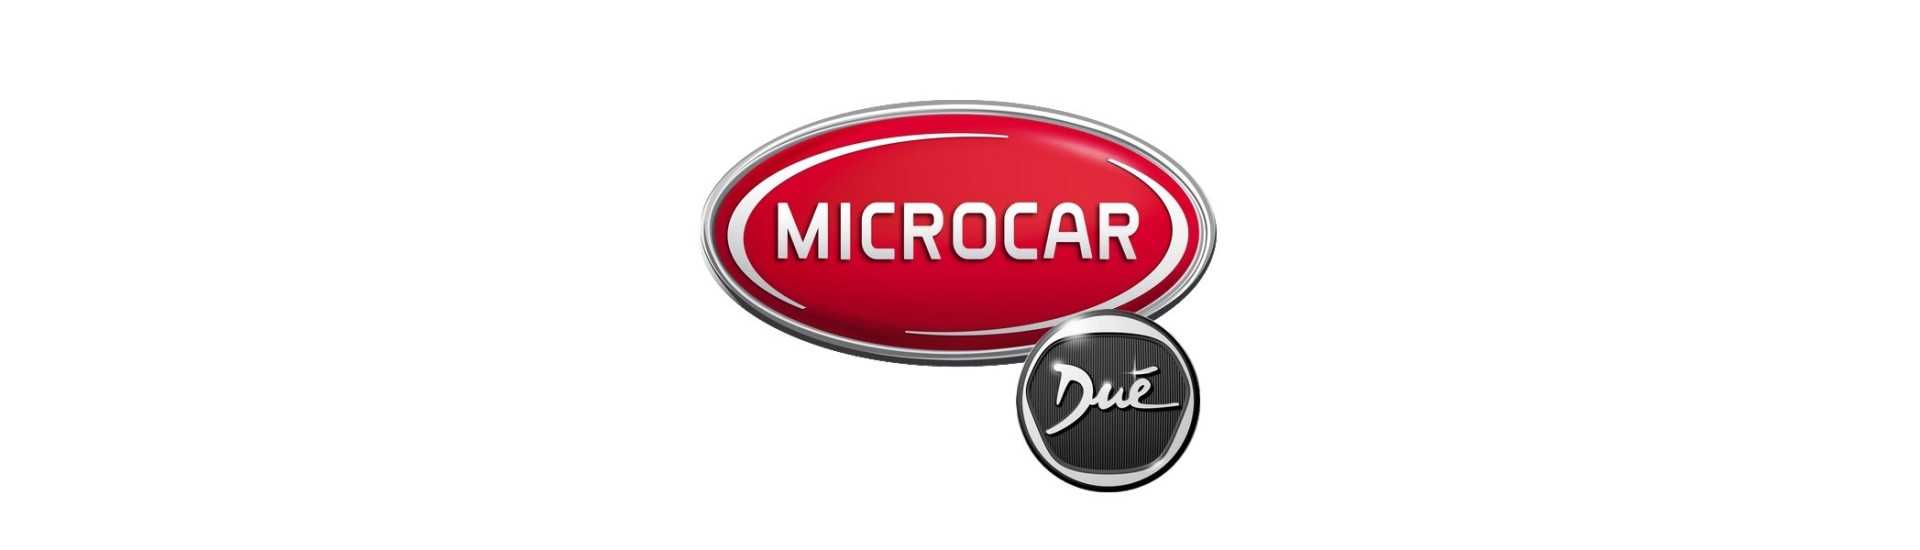 Nopeusvipua parhaaseen hintaan ilman lupaa Microcar Dué